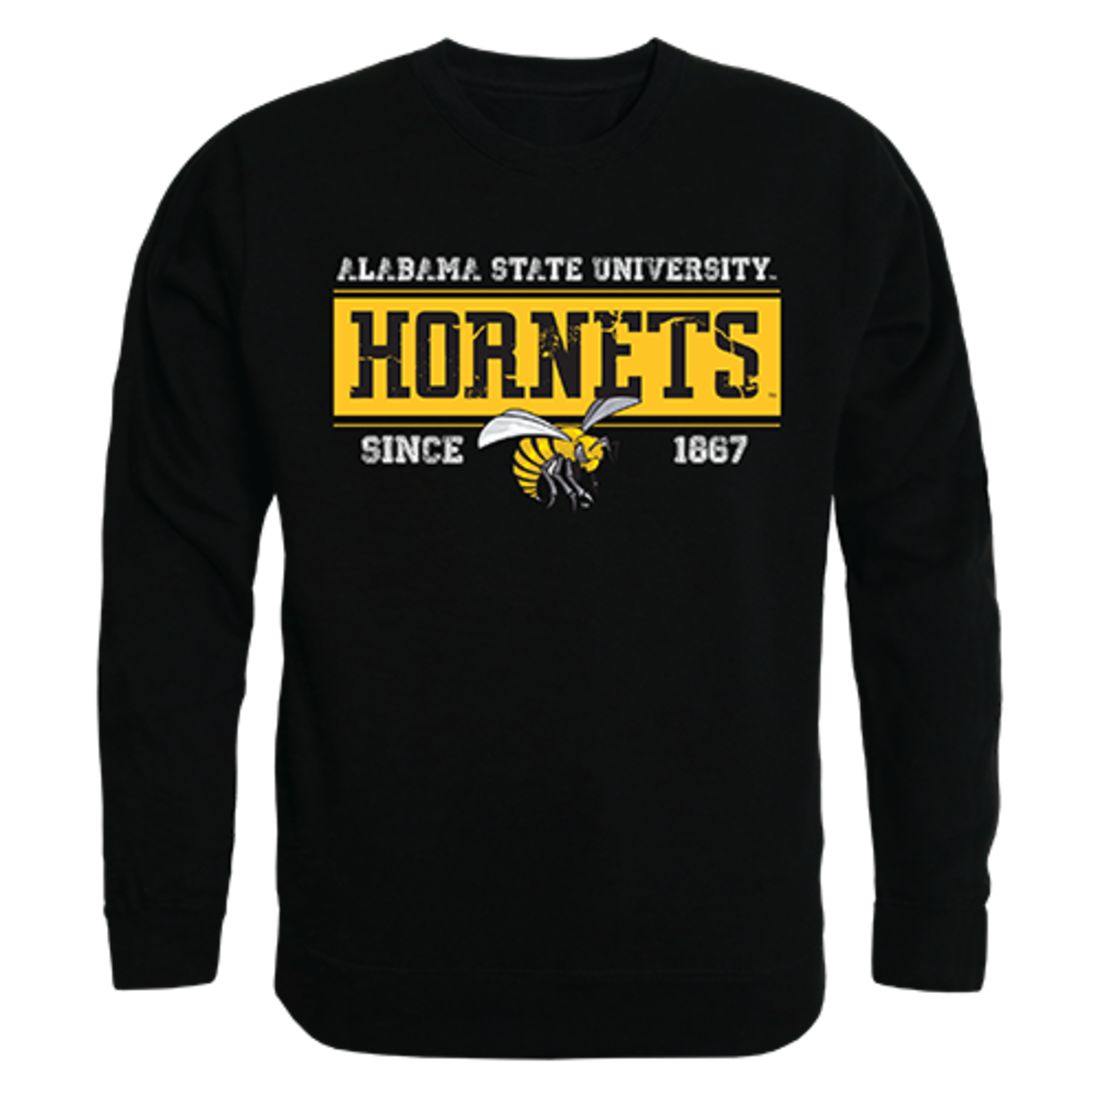 ASU Alabama State University Hornets Established Crewneck Pullover Sweatshirt Sweater Black-Campus-Wardrobe